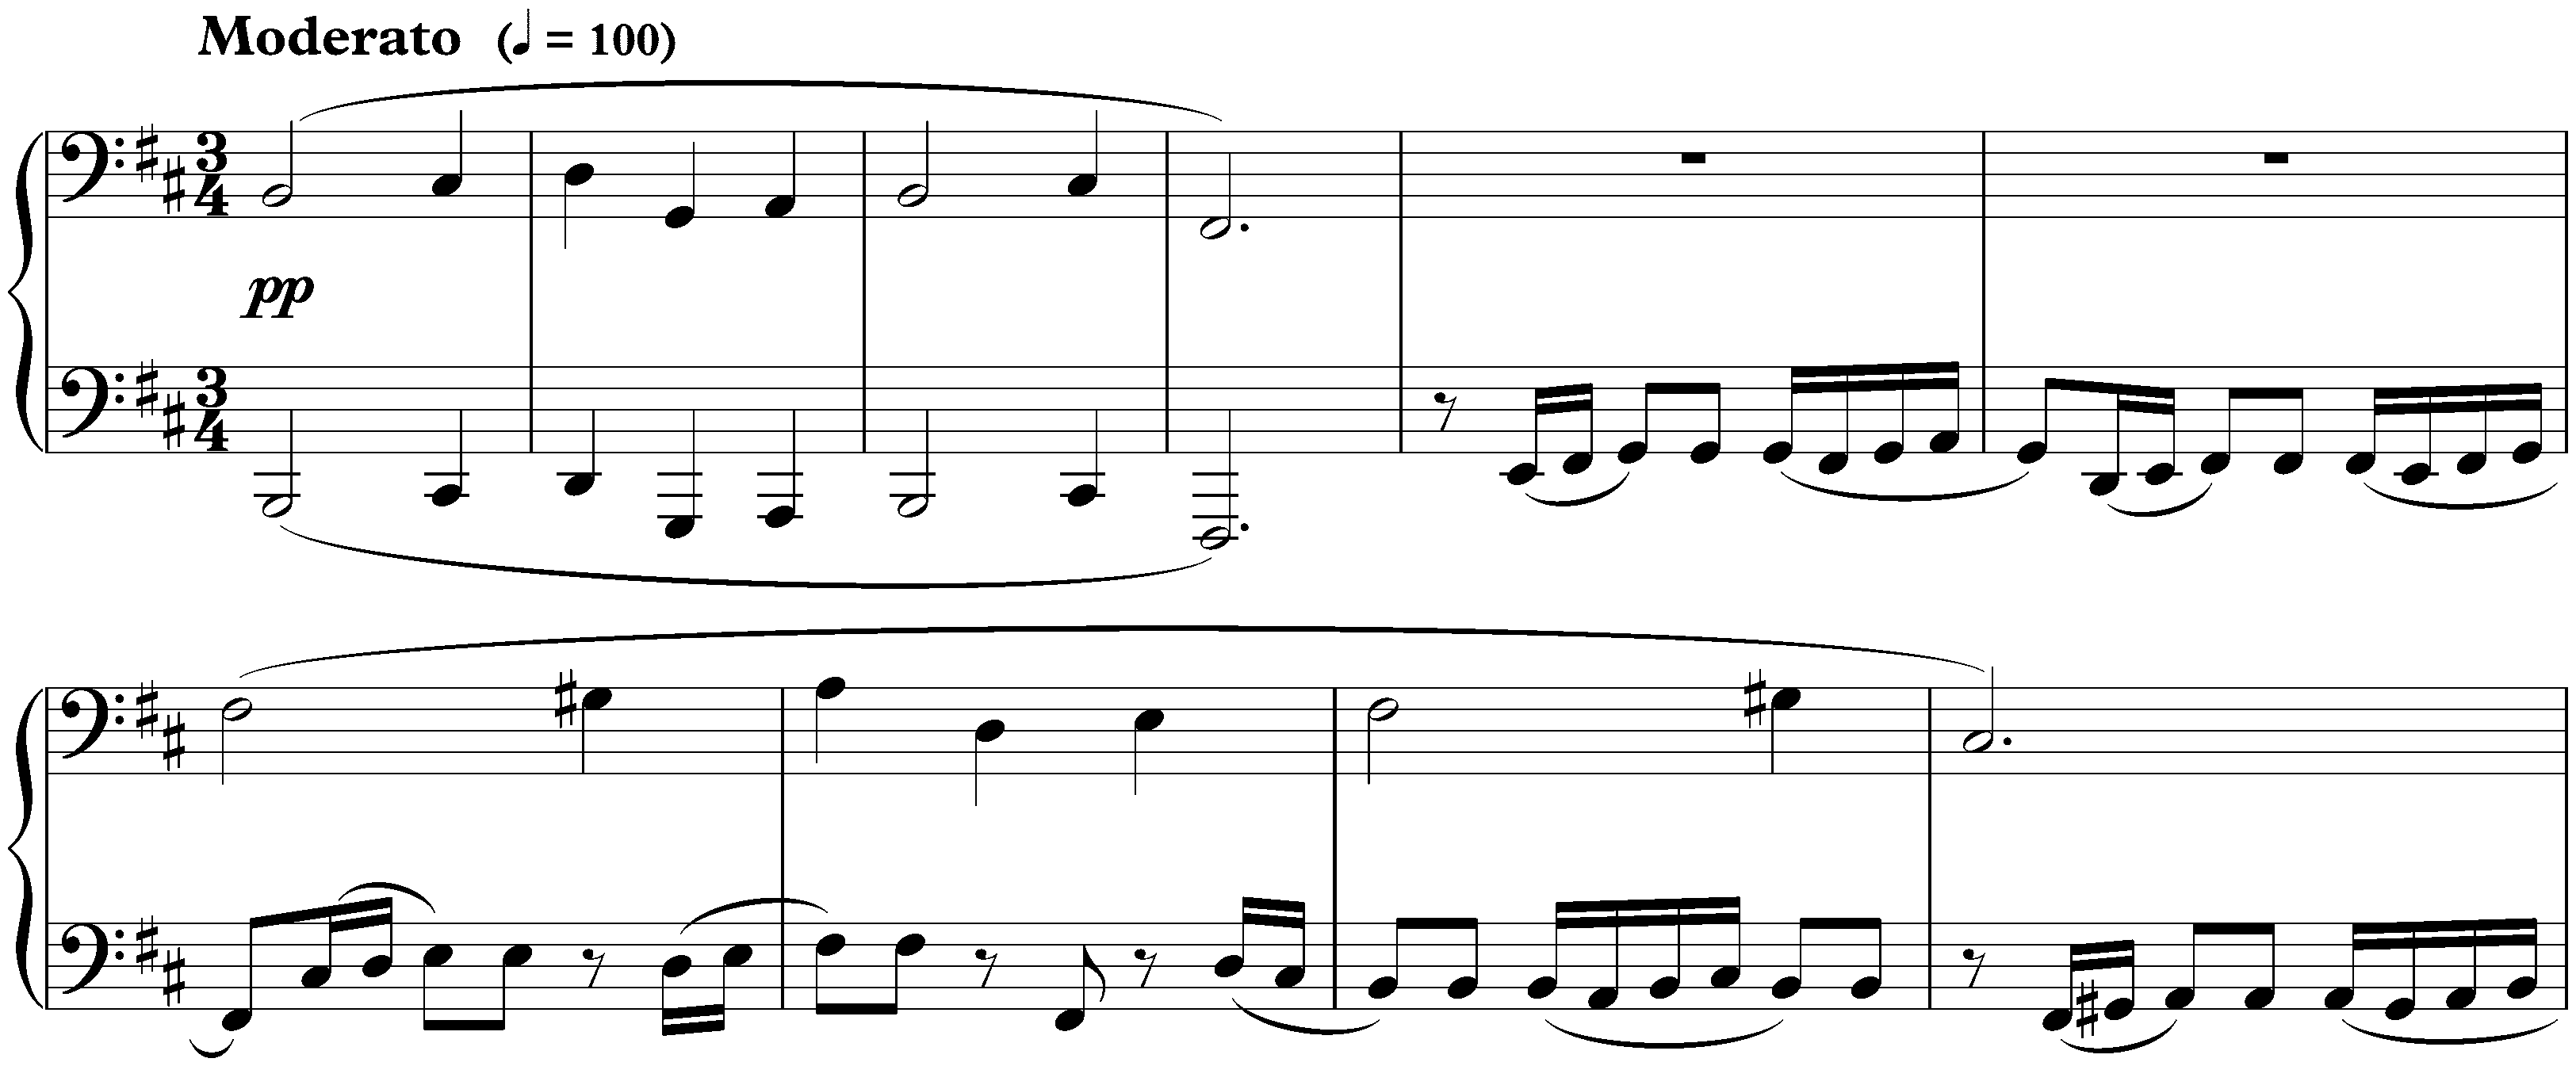 Twenty-four Preludes and Fugues, op. 87; 6. B minor, Fugue